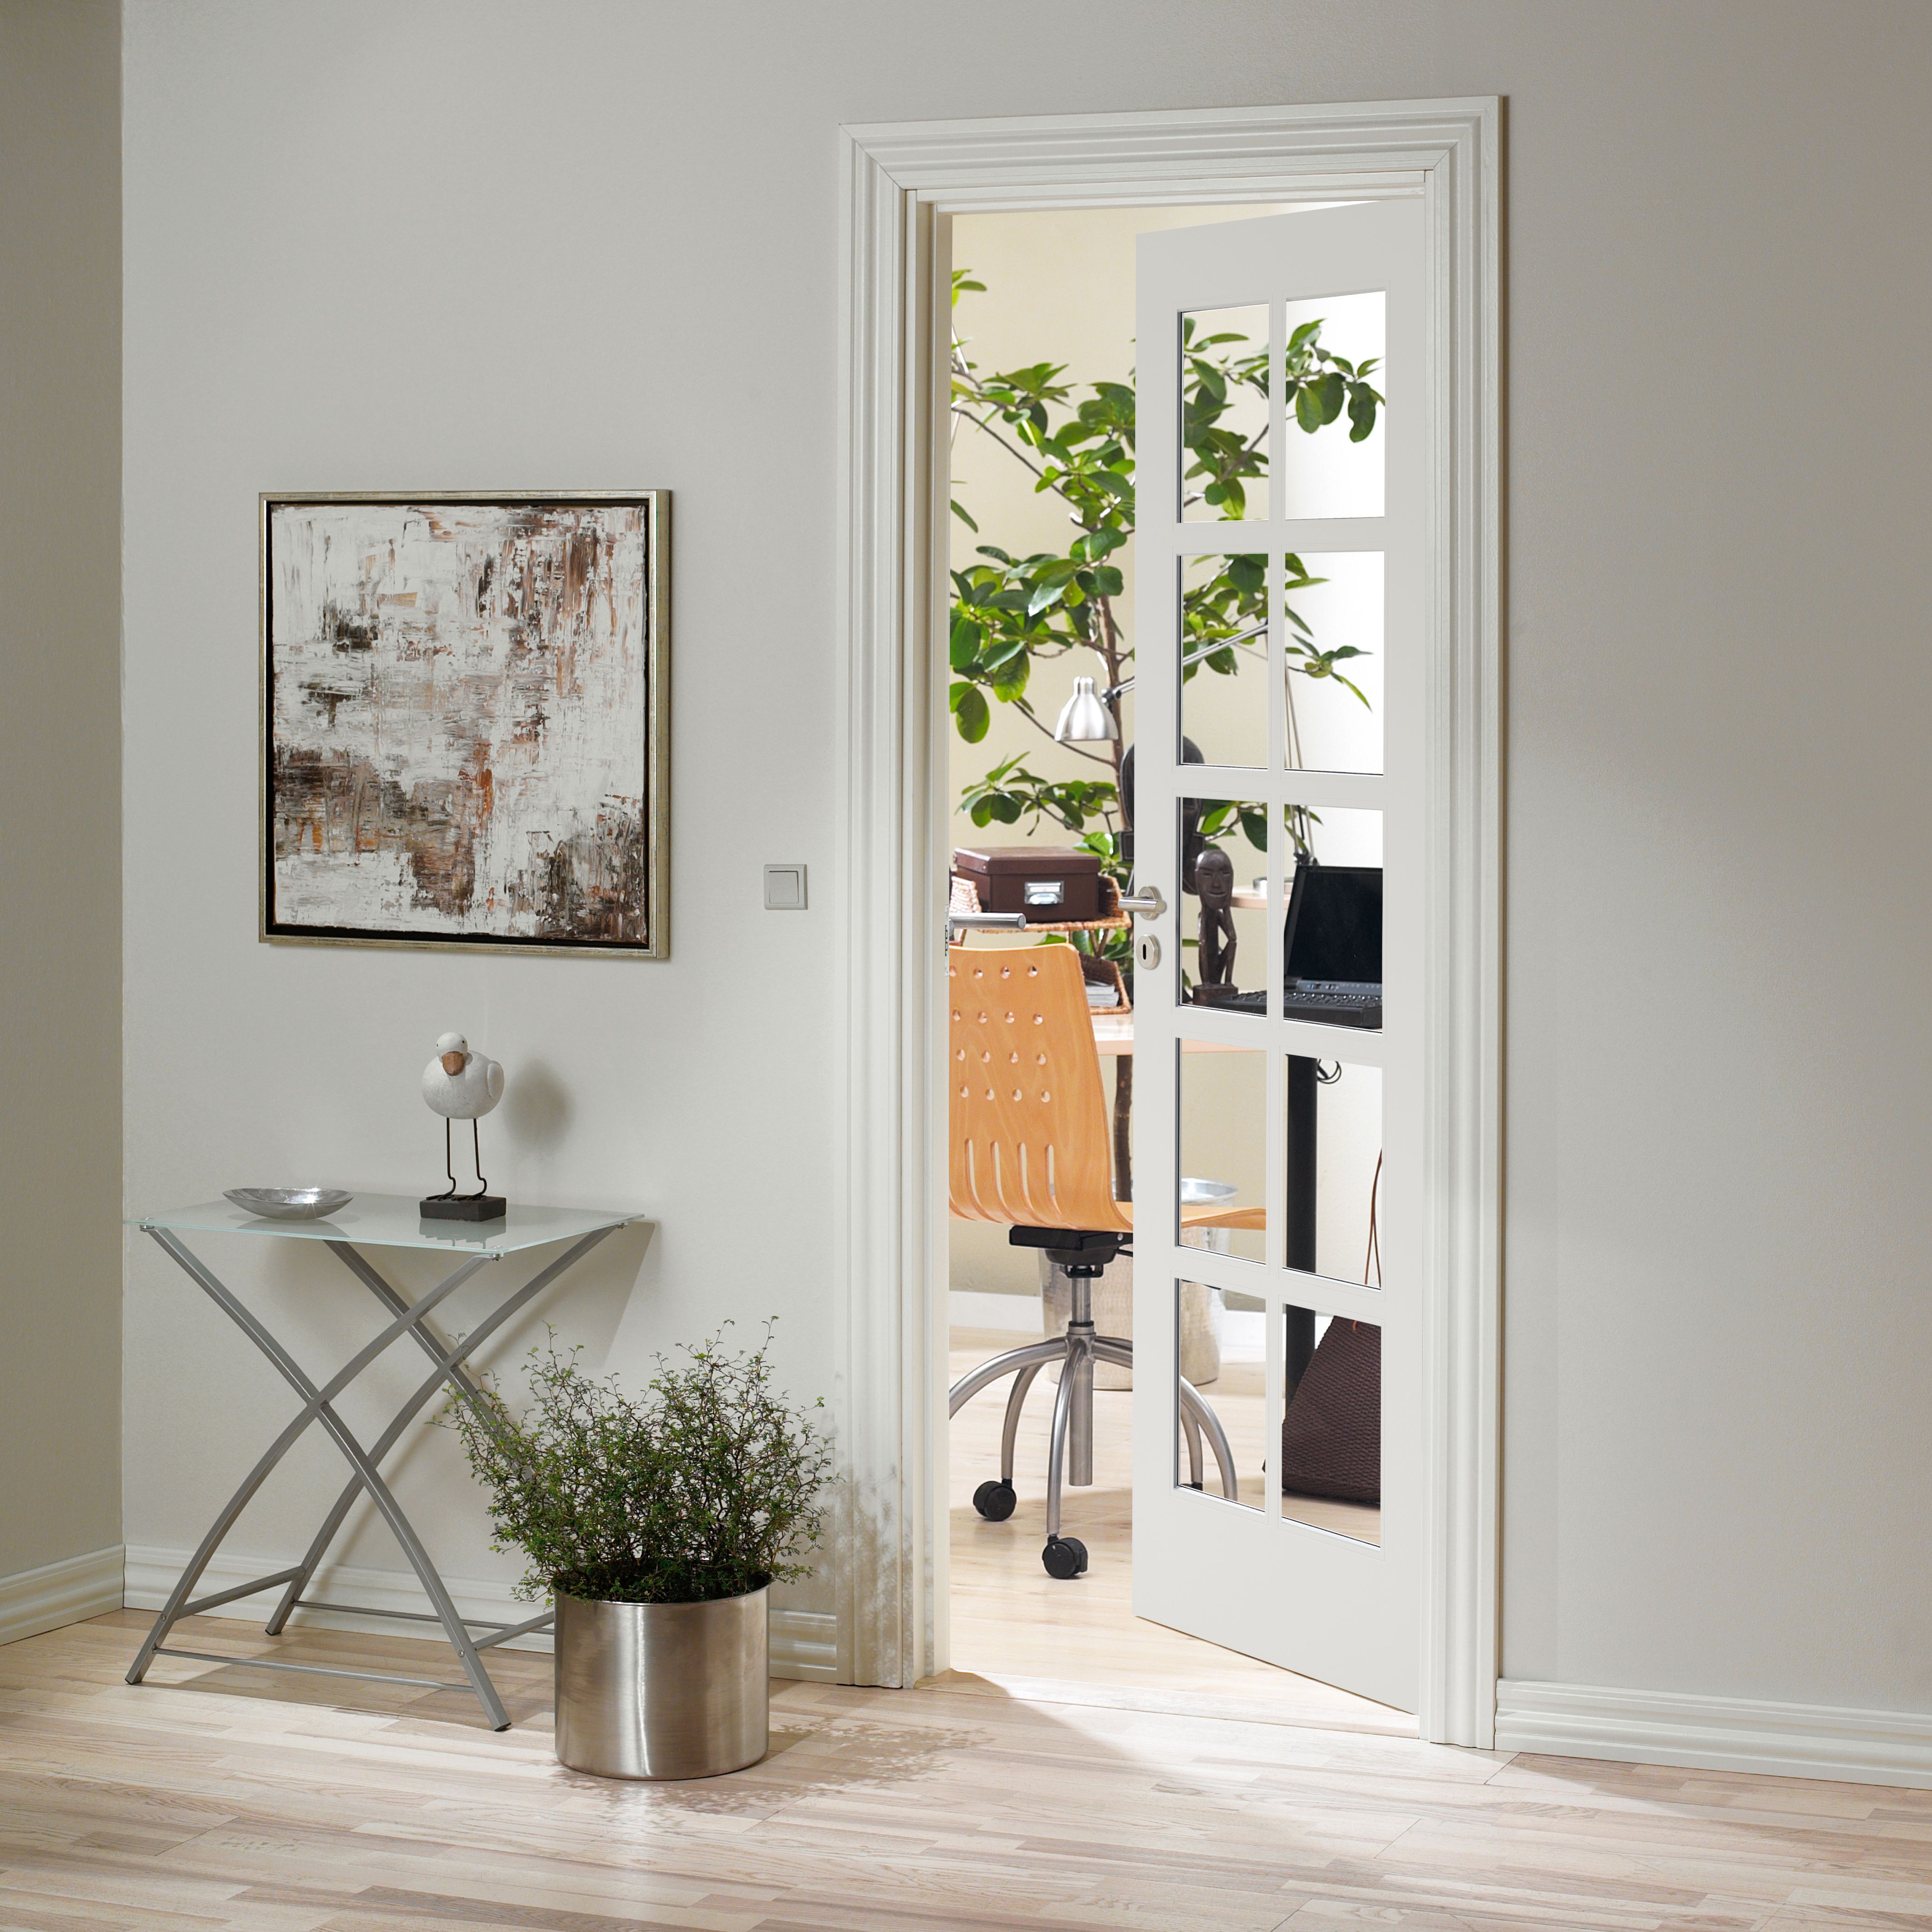 10 Lite Glazed White Internal Door, (H)1981mm (W)762mm (T)35mm